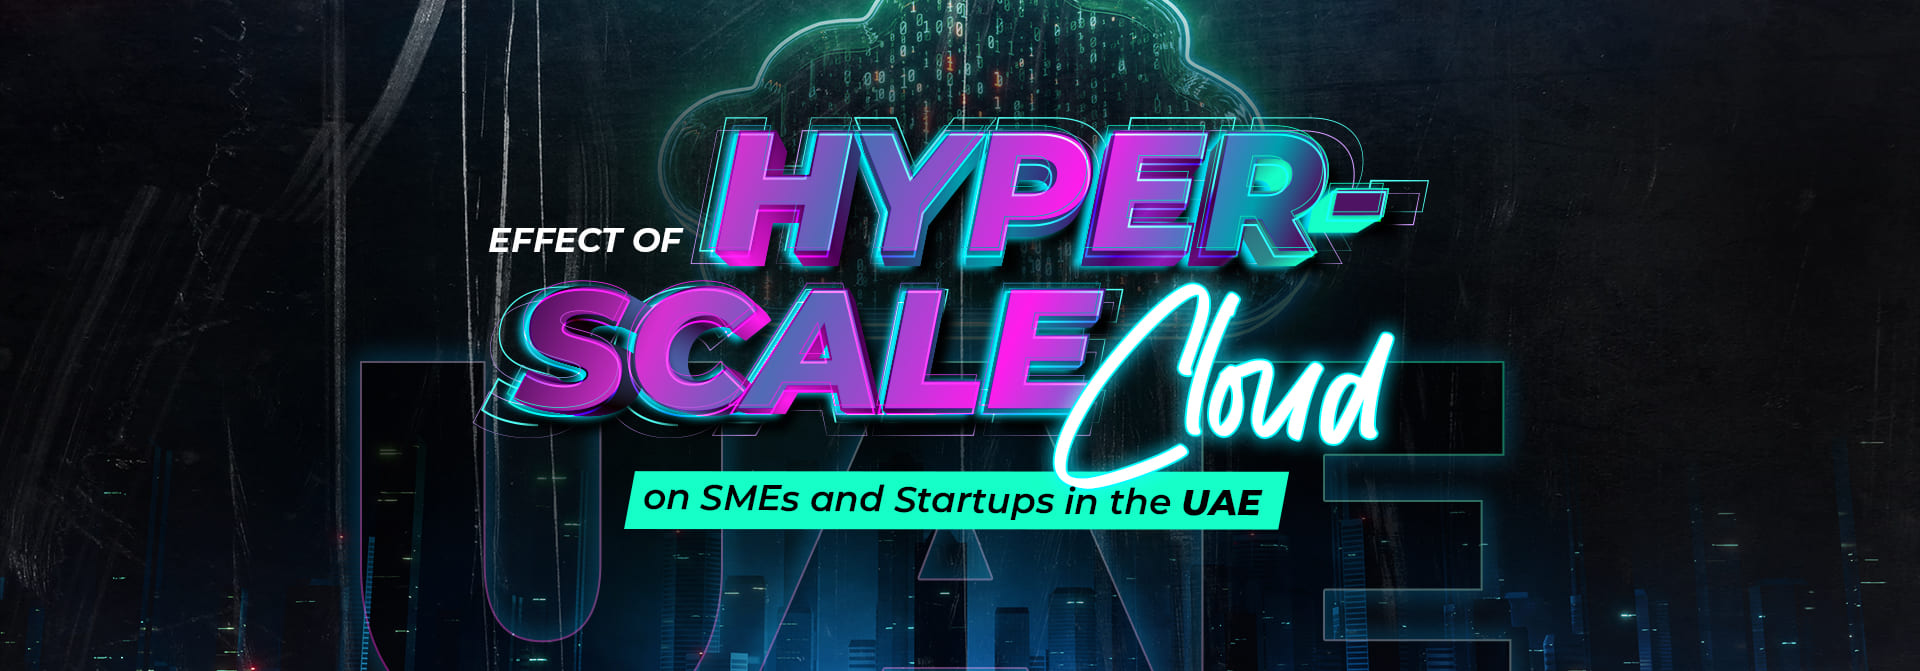 Hyperscale Cloud_UAE_Banner